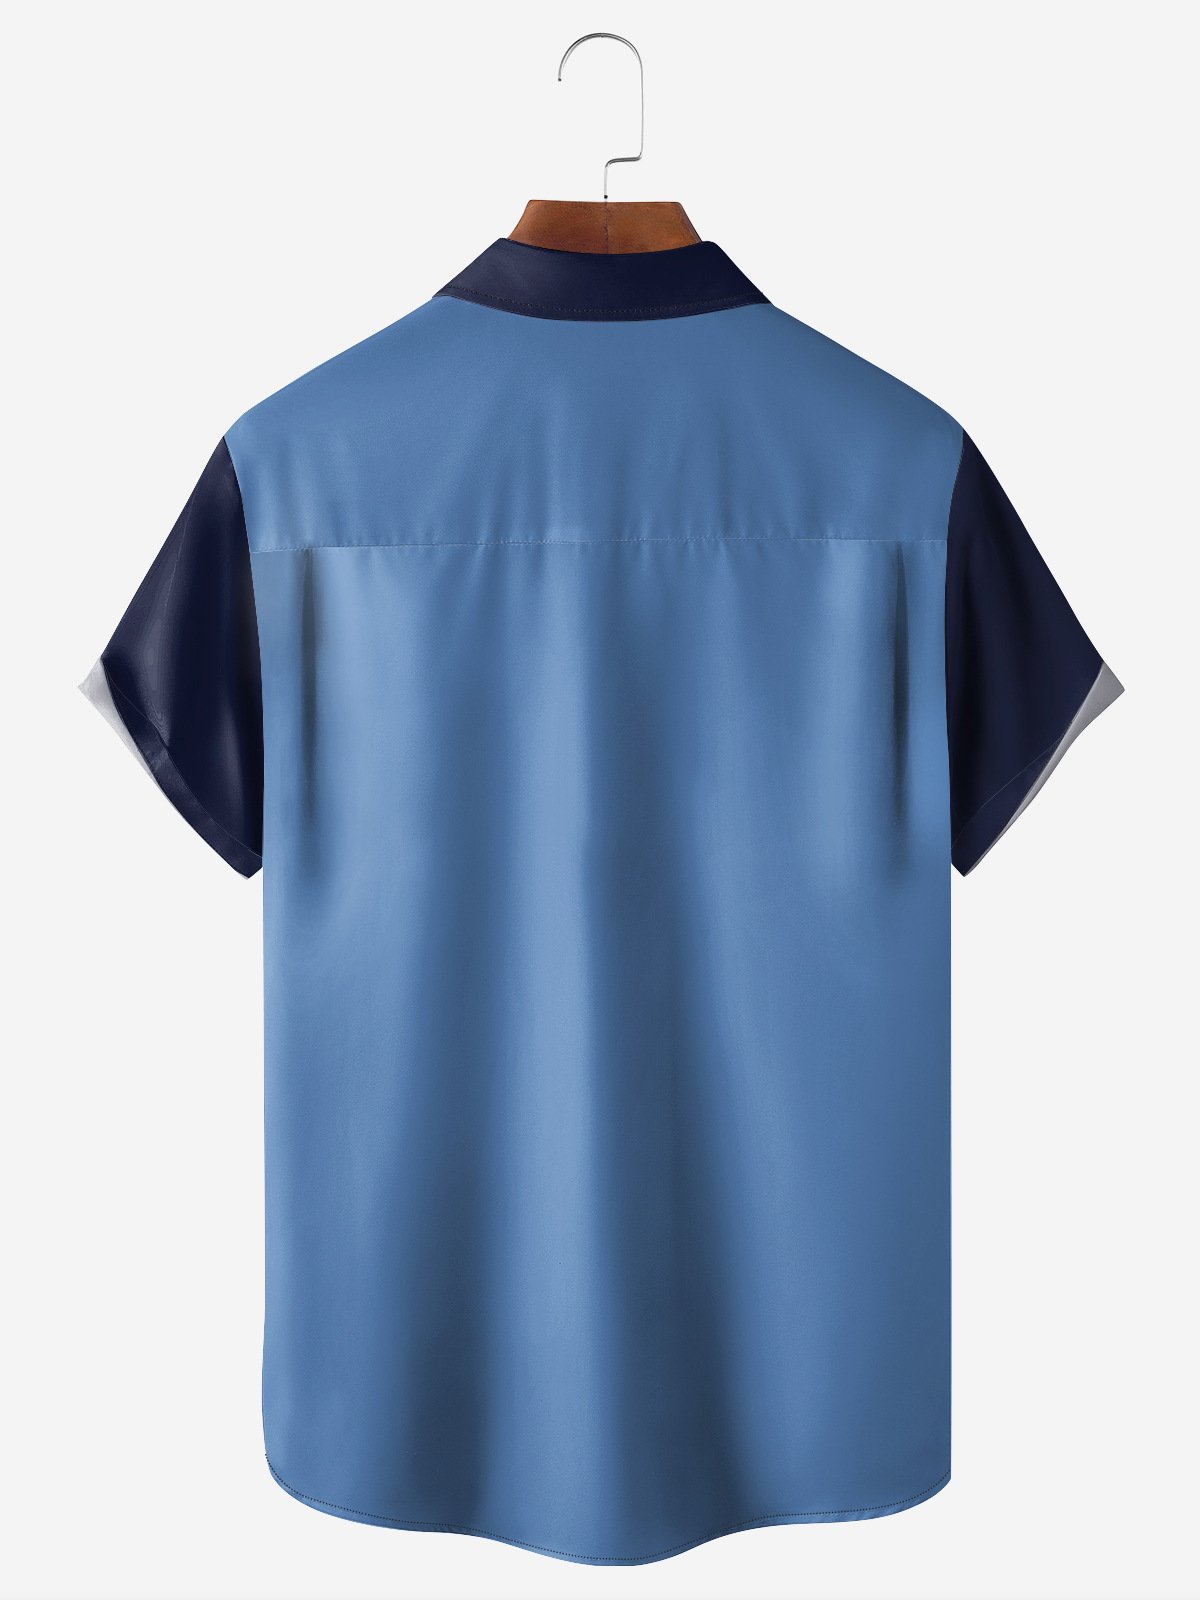 Hardaddy Football Striped Chest Pocket Short Sleeve Bowling Shirt